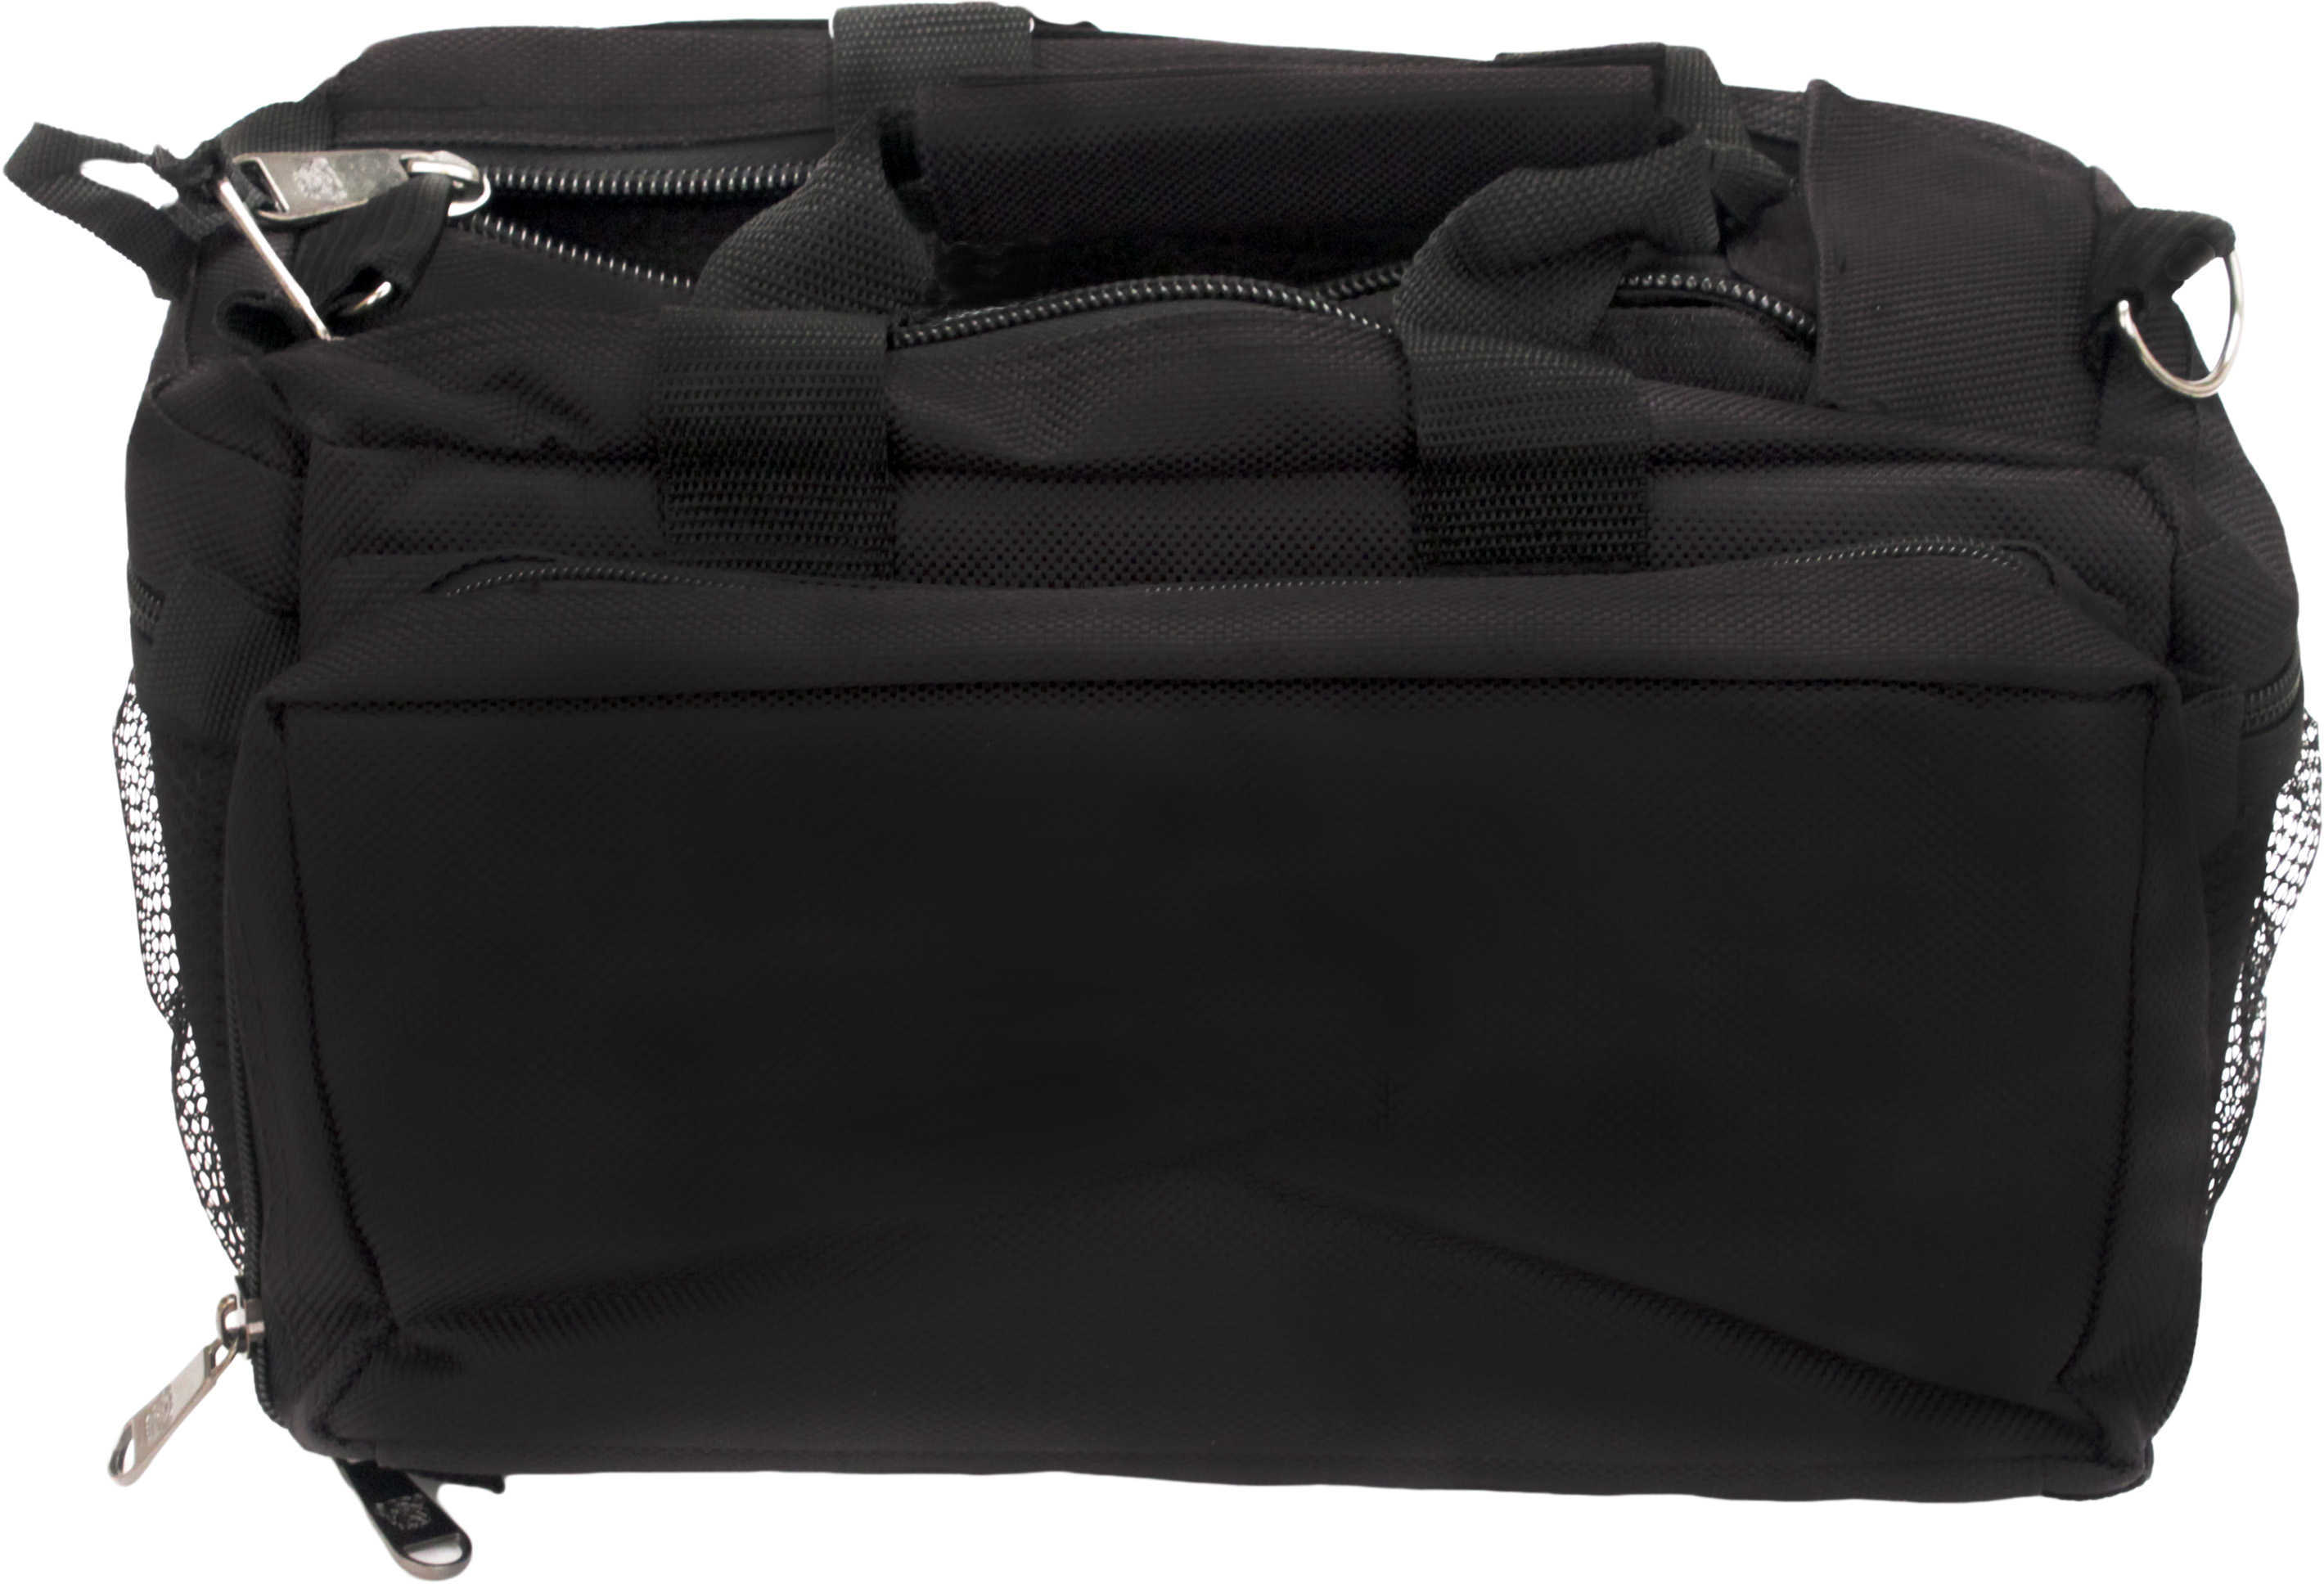 Bulldog Cases Deluxe Range Bag with Strap Black BD910